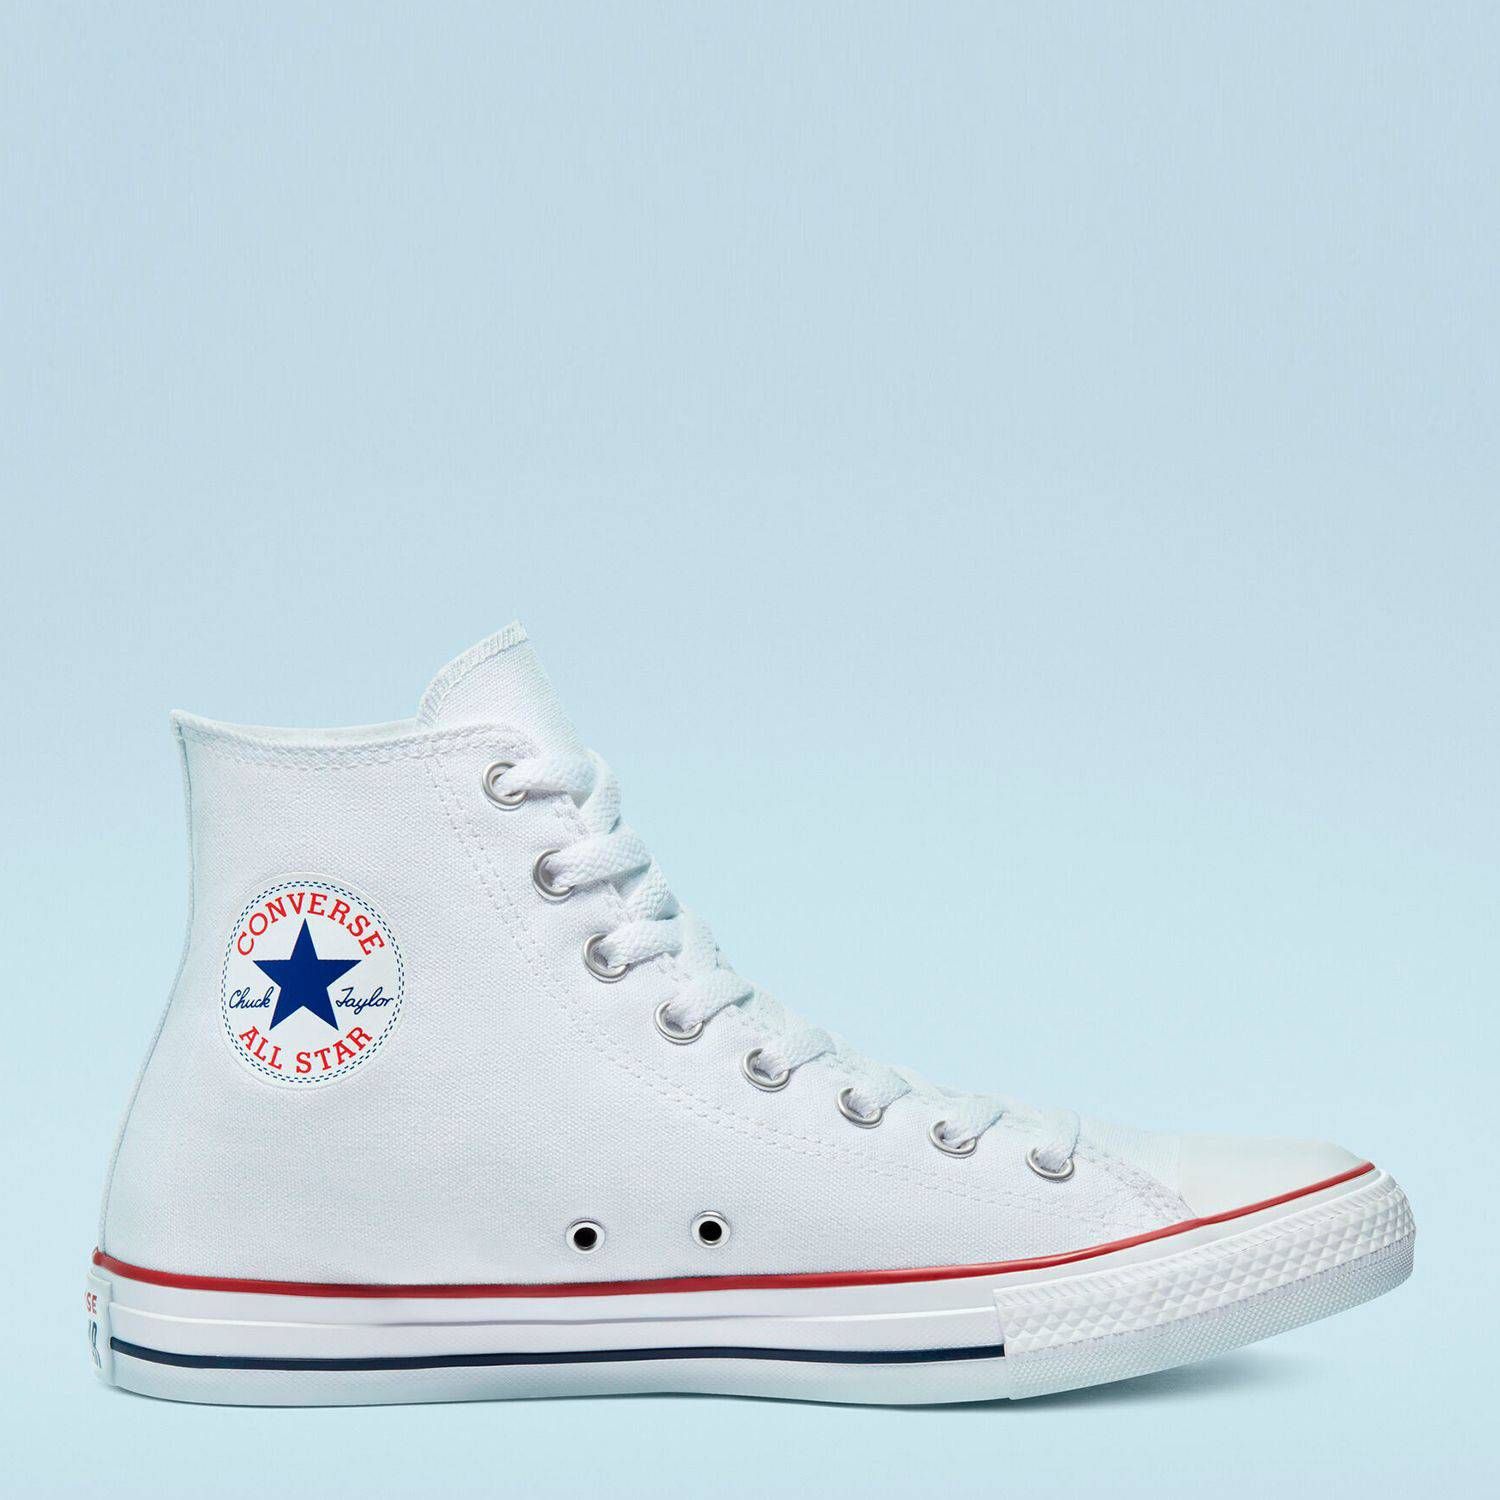 Beweren Herhaald Ben depressief Converse – Chuck Taylor All Star – Hohe Sneaker Aus Weißem Leder |  amymargarida.com